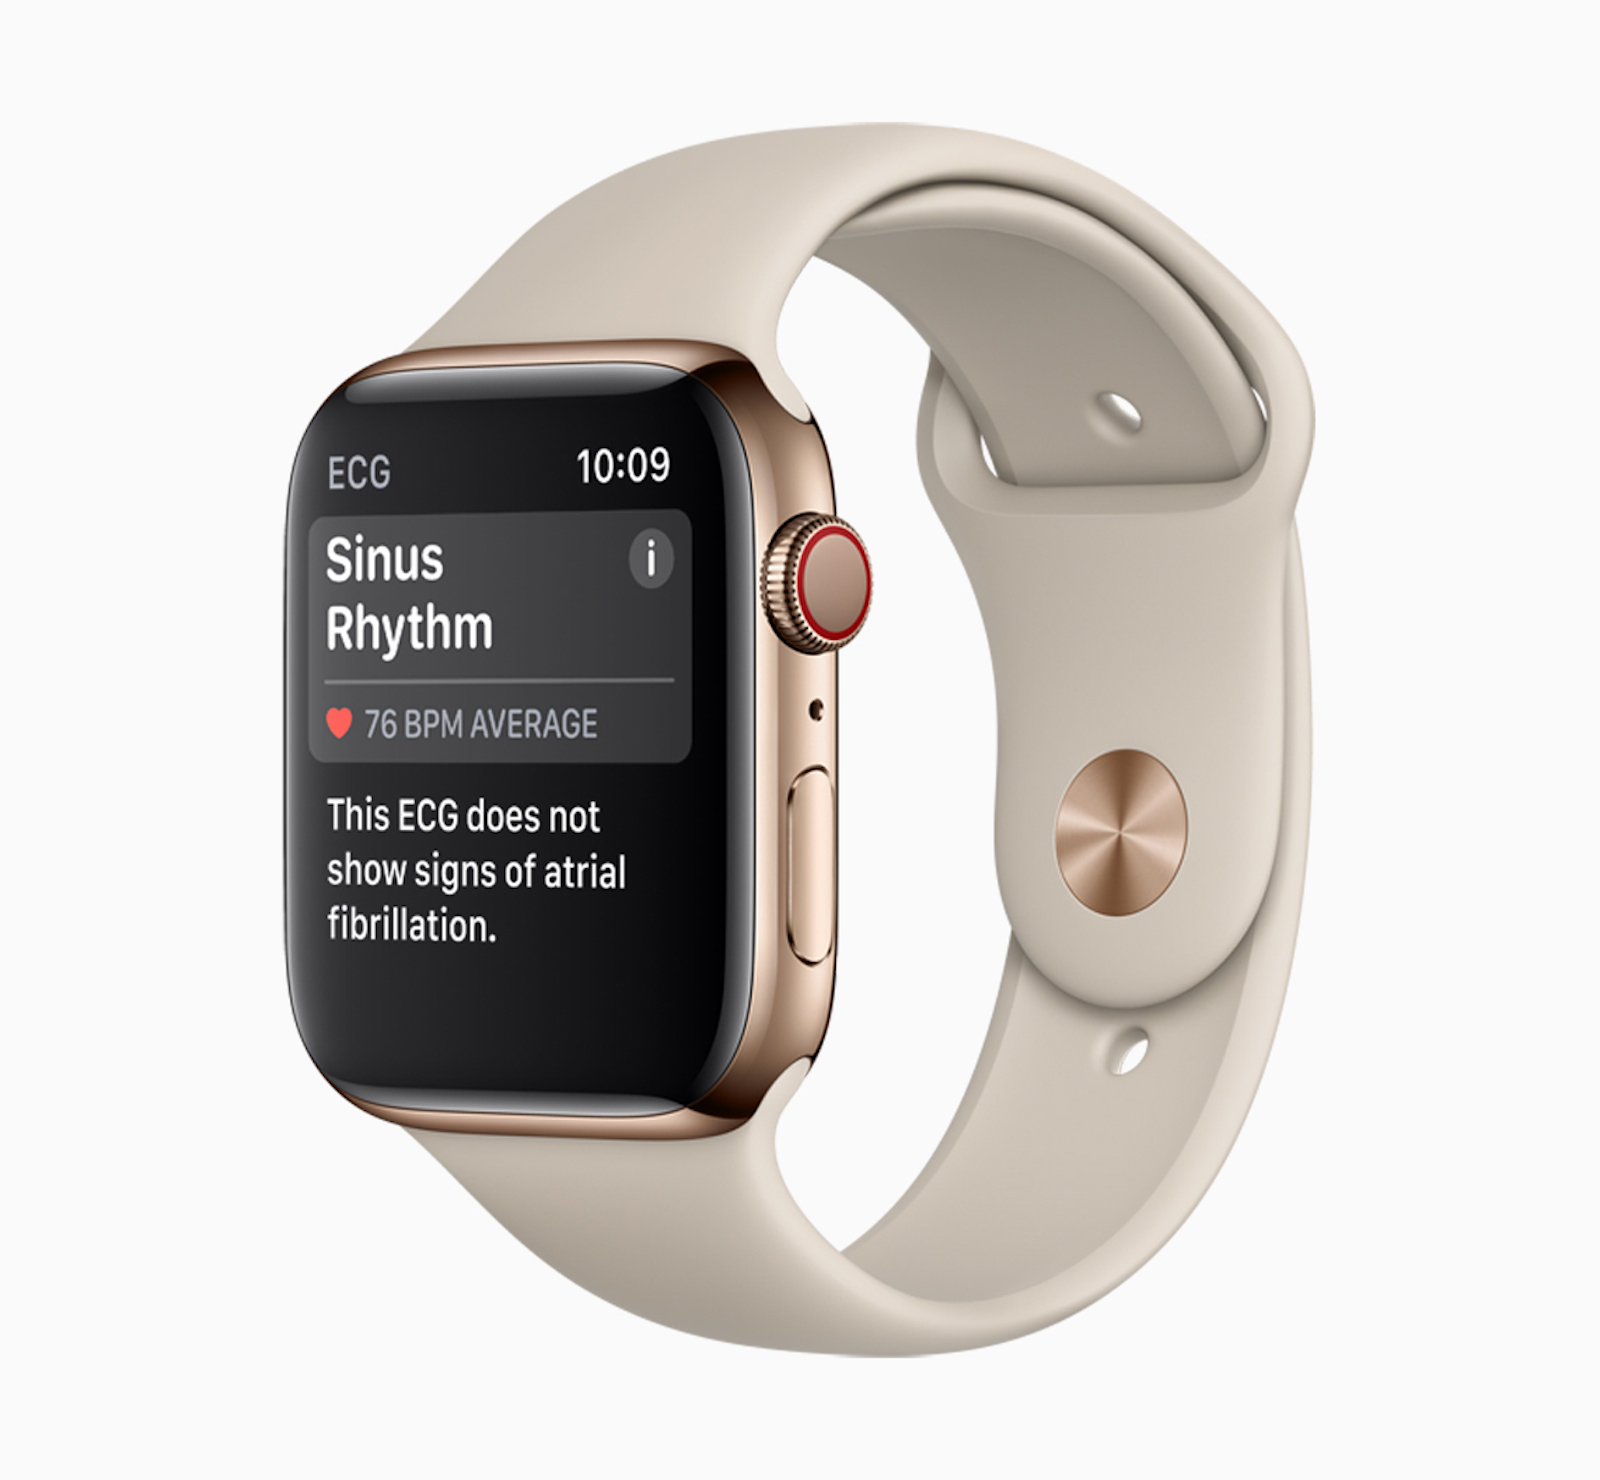 Apple-Watch-Series-4-Sinus-Rhythm-screen-12062018.jpg